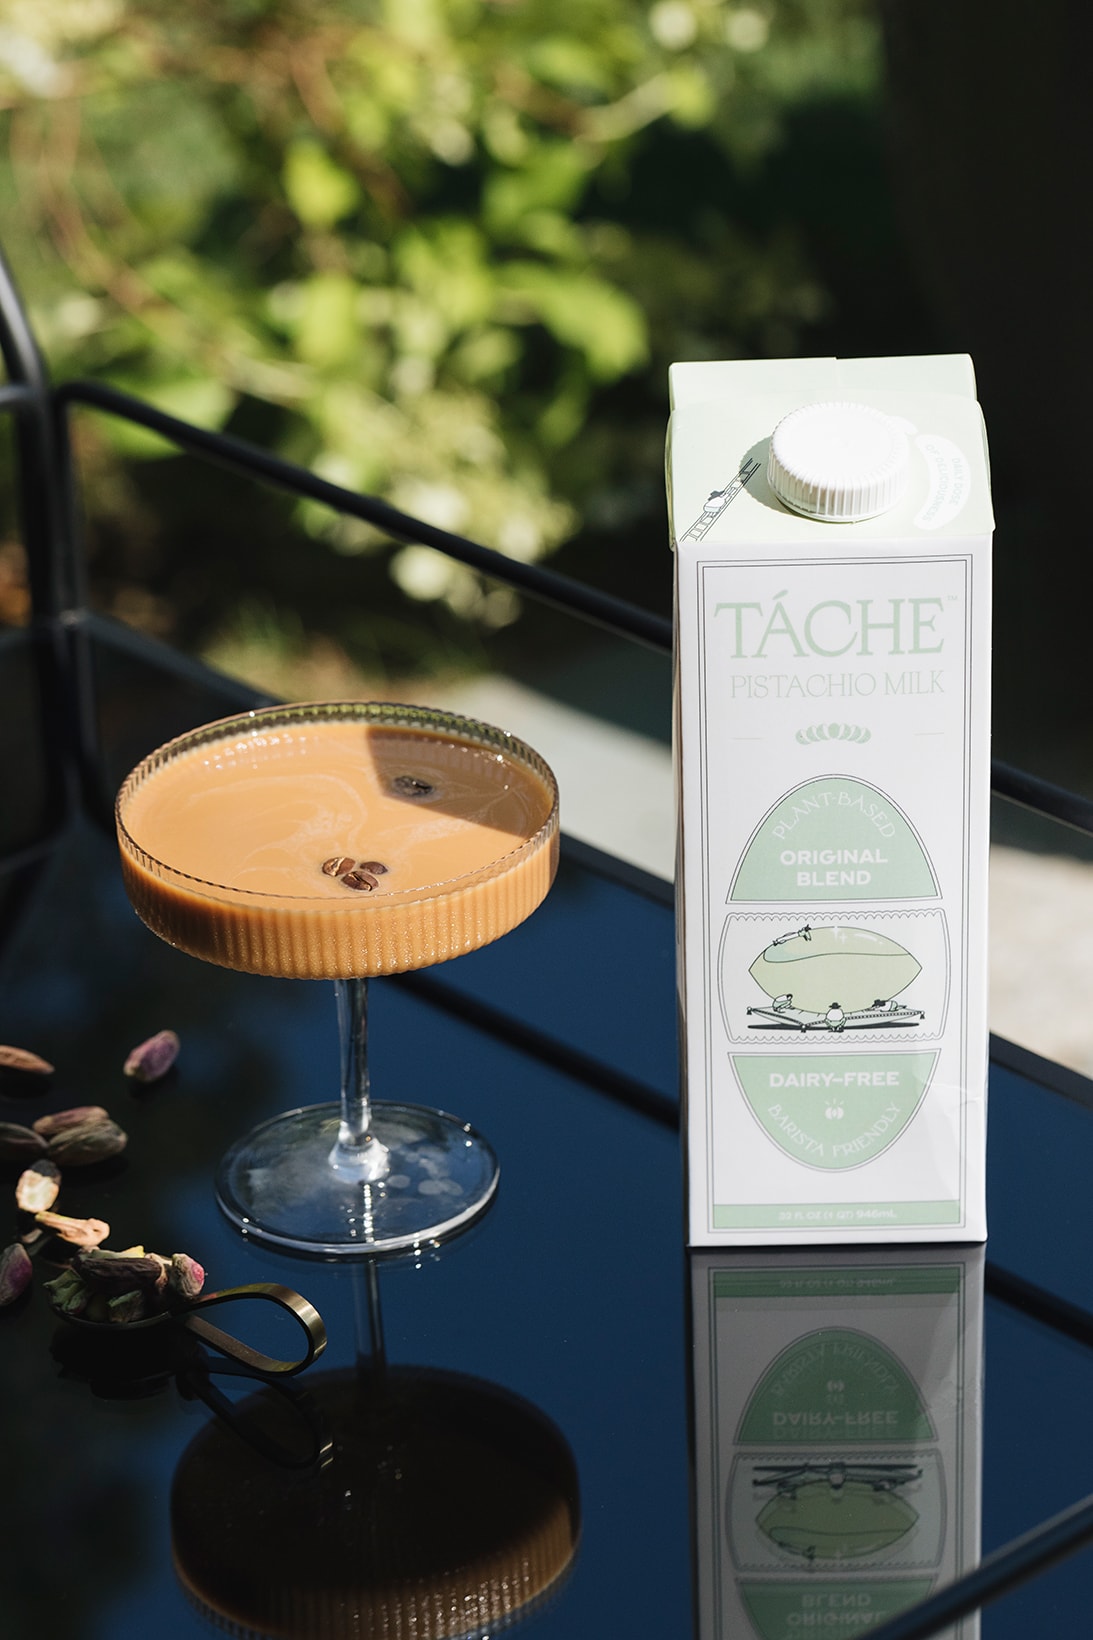 tache pistachio milk original blend unsweetened dairy free alternative green coffee fruits cake organic food drinks health natural 